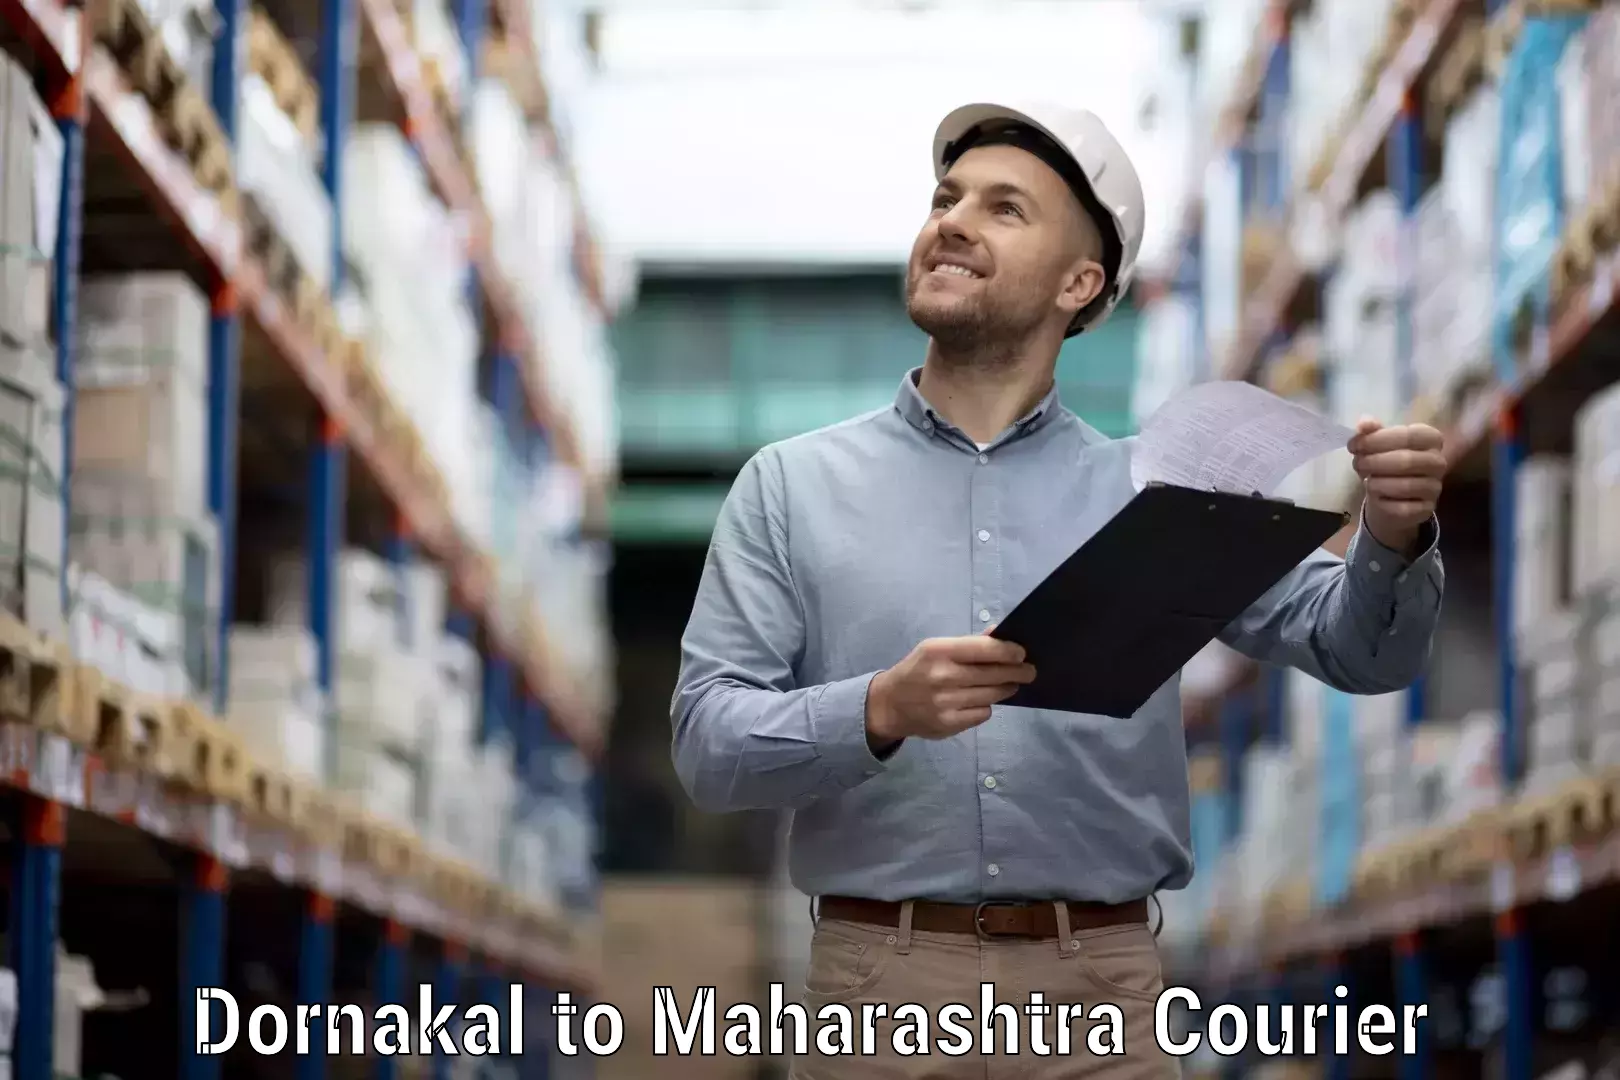 Professional courier handling Dornakal to IIIT Nagpur